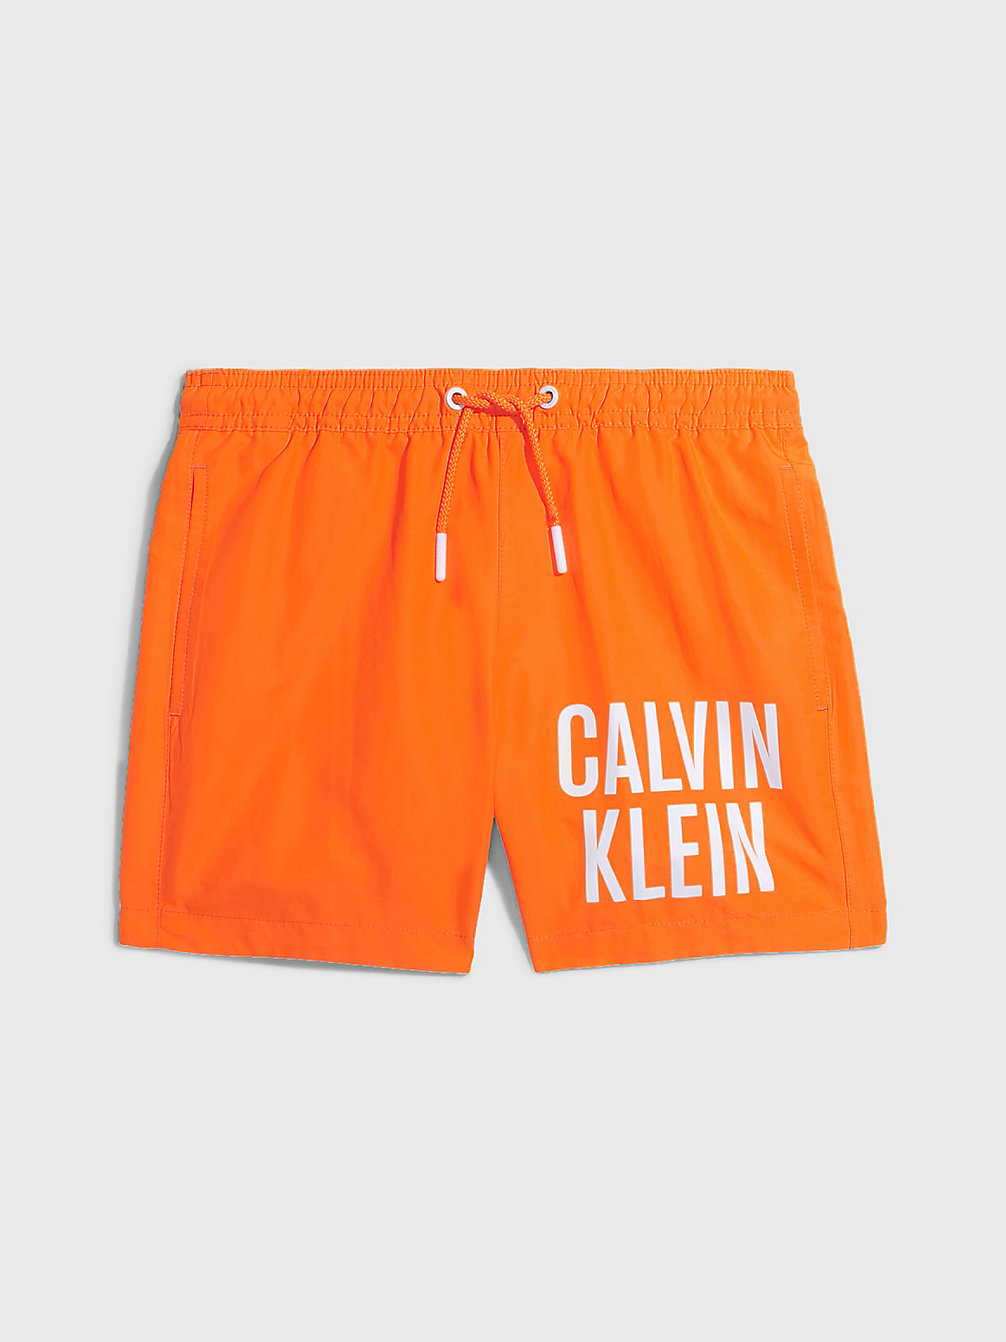 SUN KISSED ORANGE Boys Swim Trunks - Intense Power undefined boys Calvin Klein